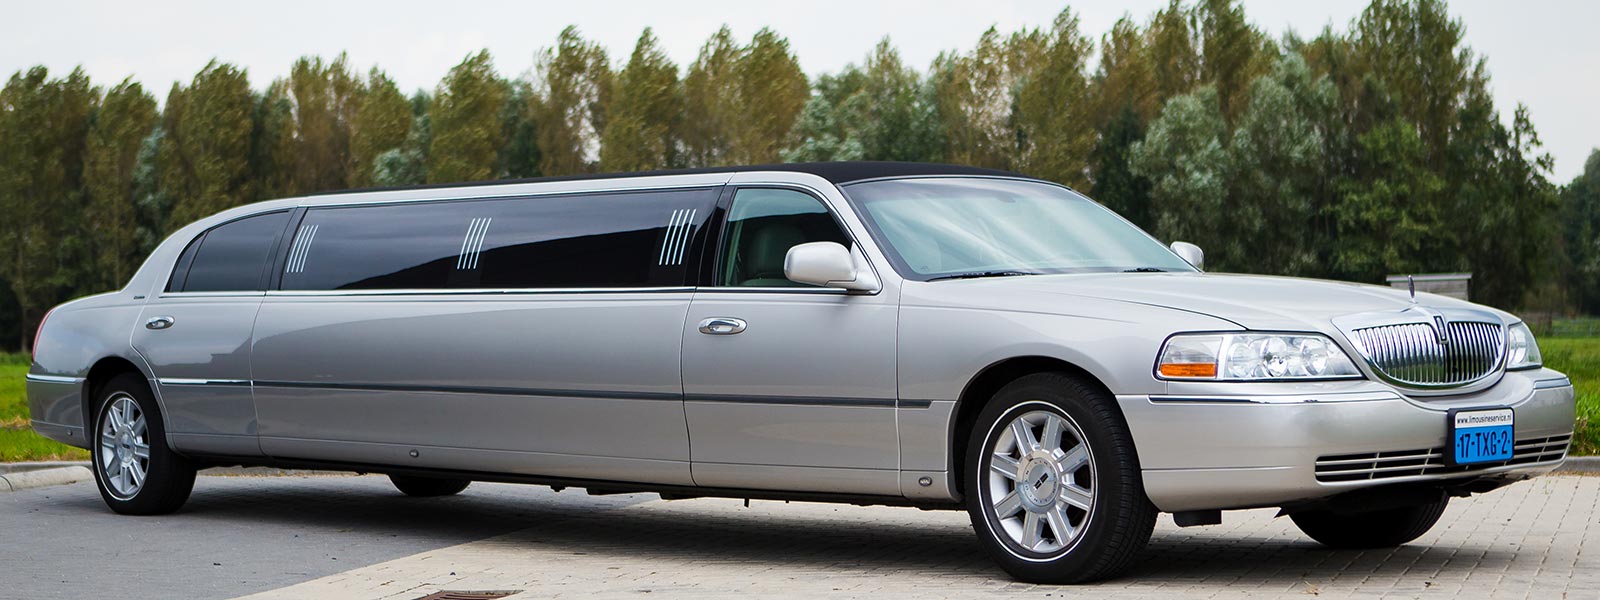 Zilveren Lincoln Limousine | Vallei-Limousines